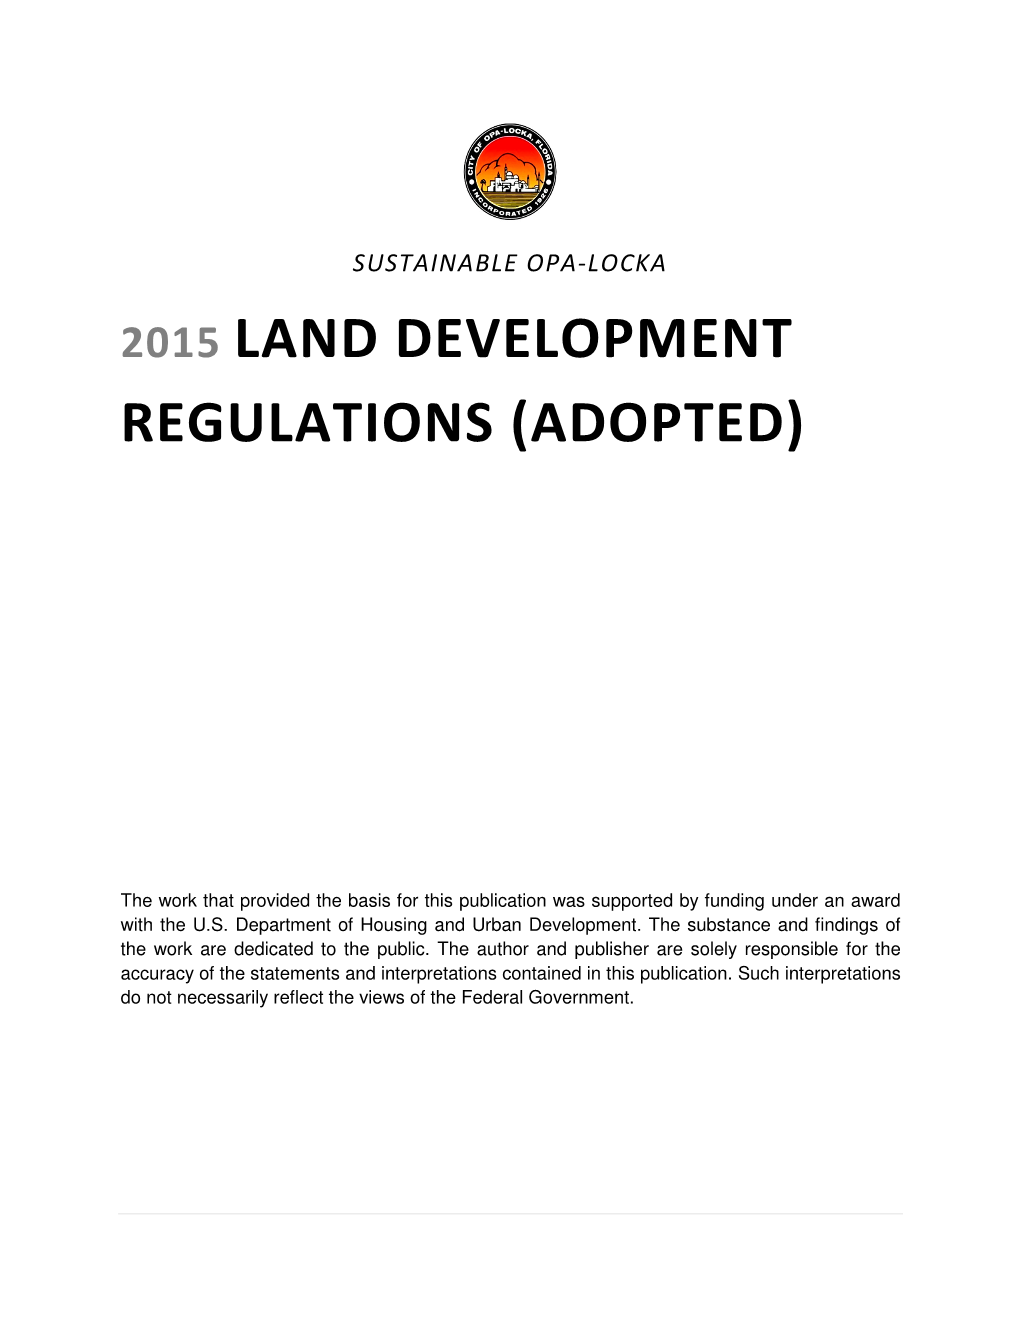 2015 Land Development Regulations (Adopted)